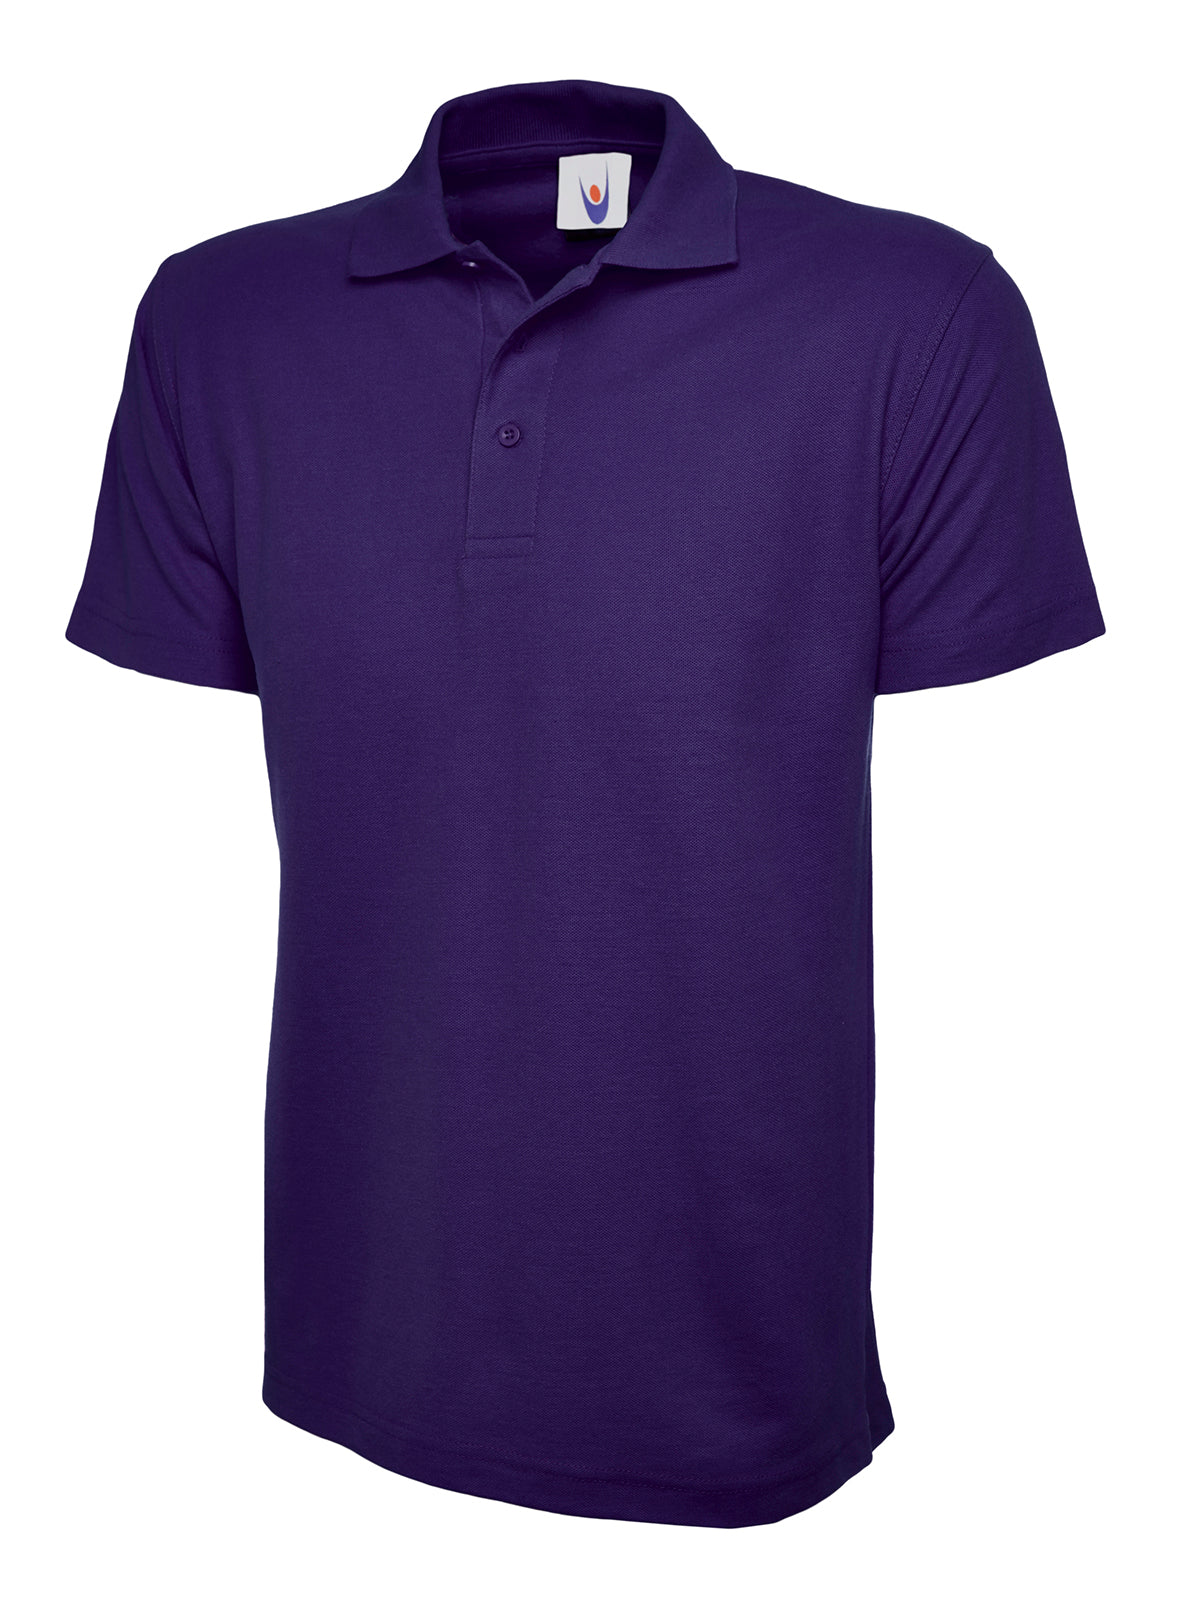 Uneek Classic Unisex Work Polo Shirt UC101 - Purple